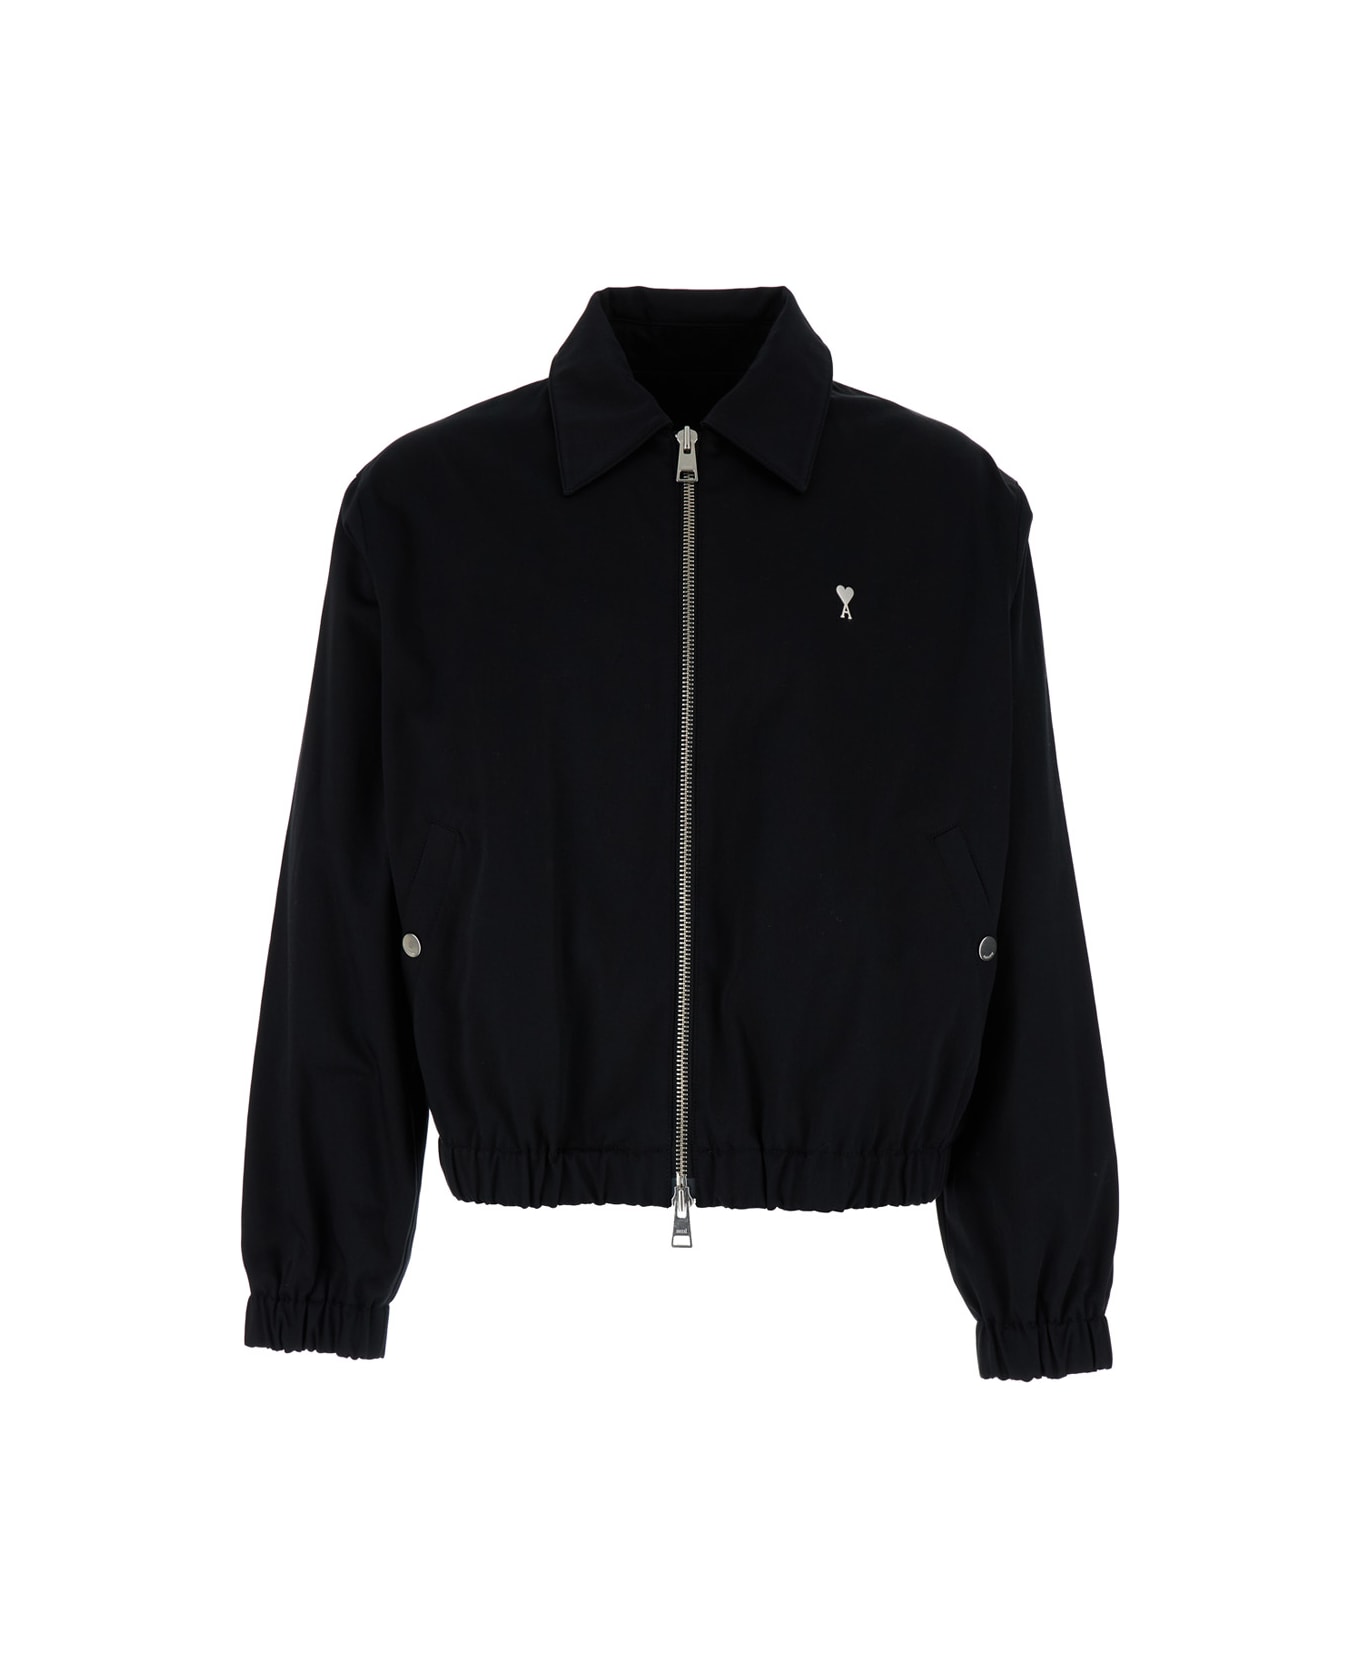 Ami Alexandre Mattiussi Black Jacket With Collar And Adc Logo In Cotton Man - Black ジャケット